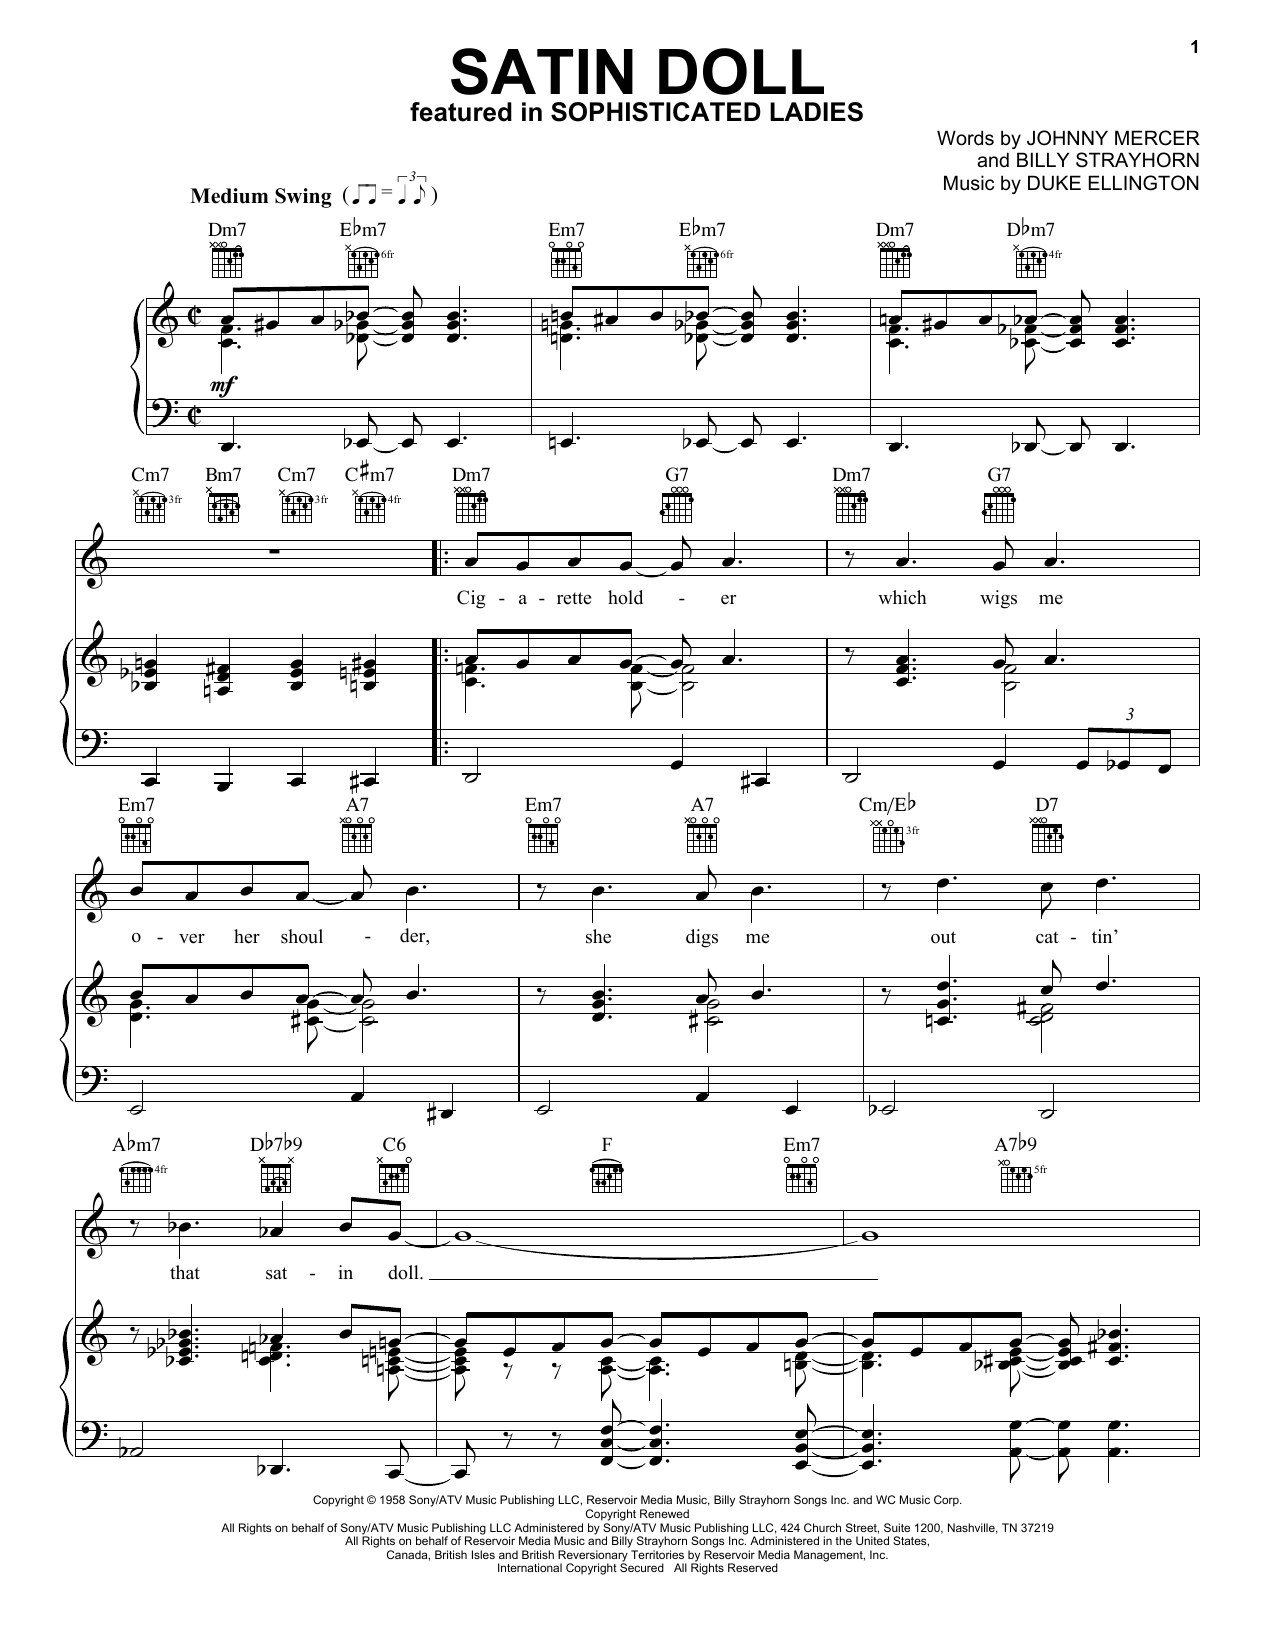 Duke Ellington Satin Doll Sheet Music Notes & Chords for Piano - Download or Print PDF